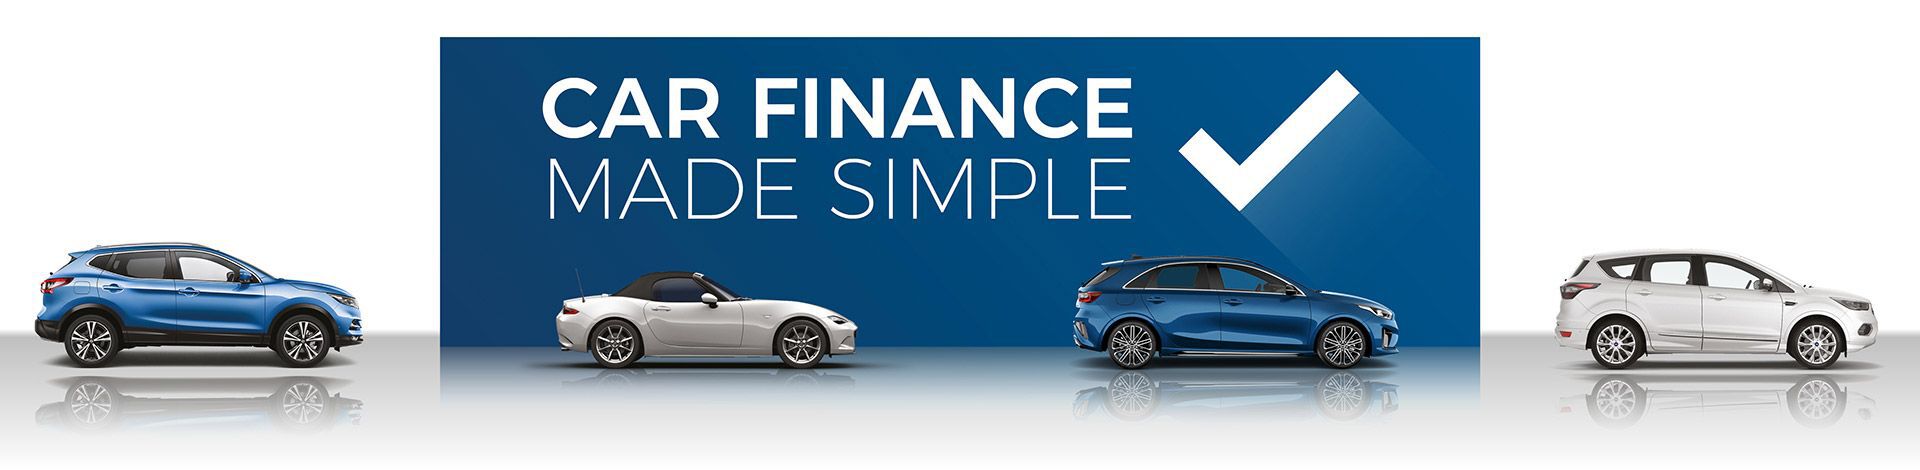 Car Finance Made Simple